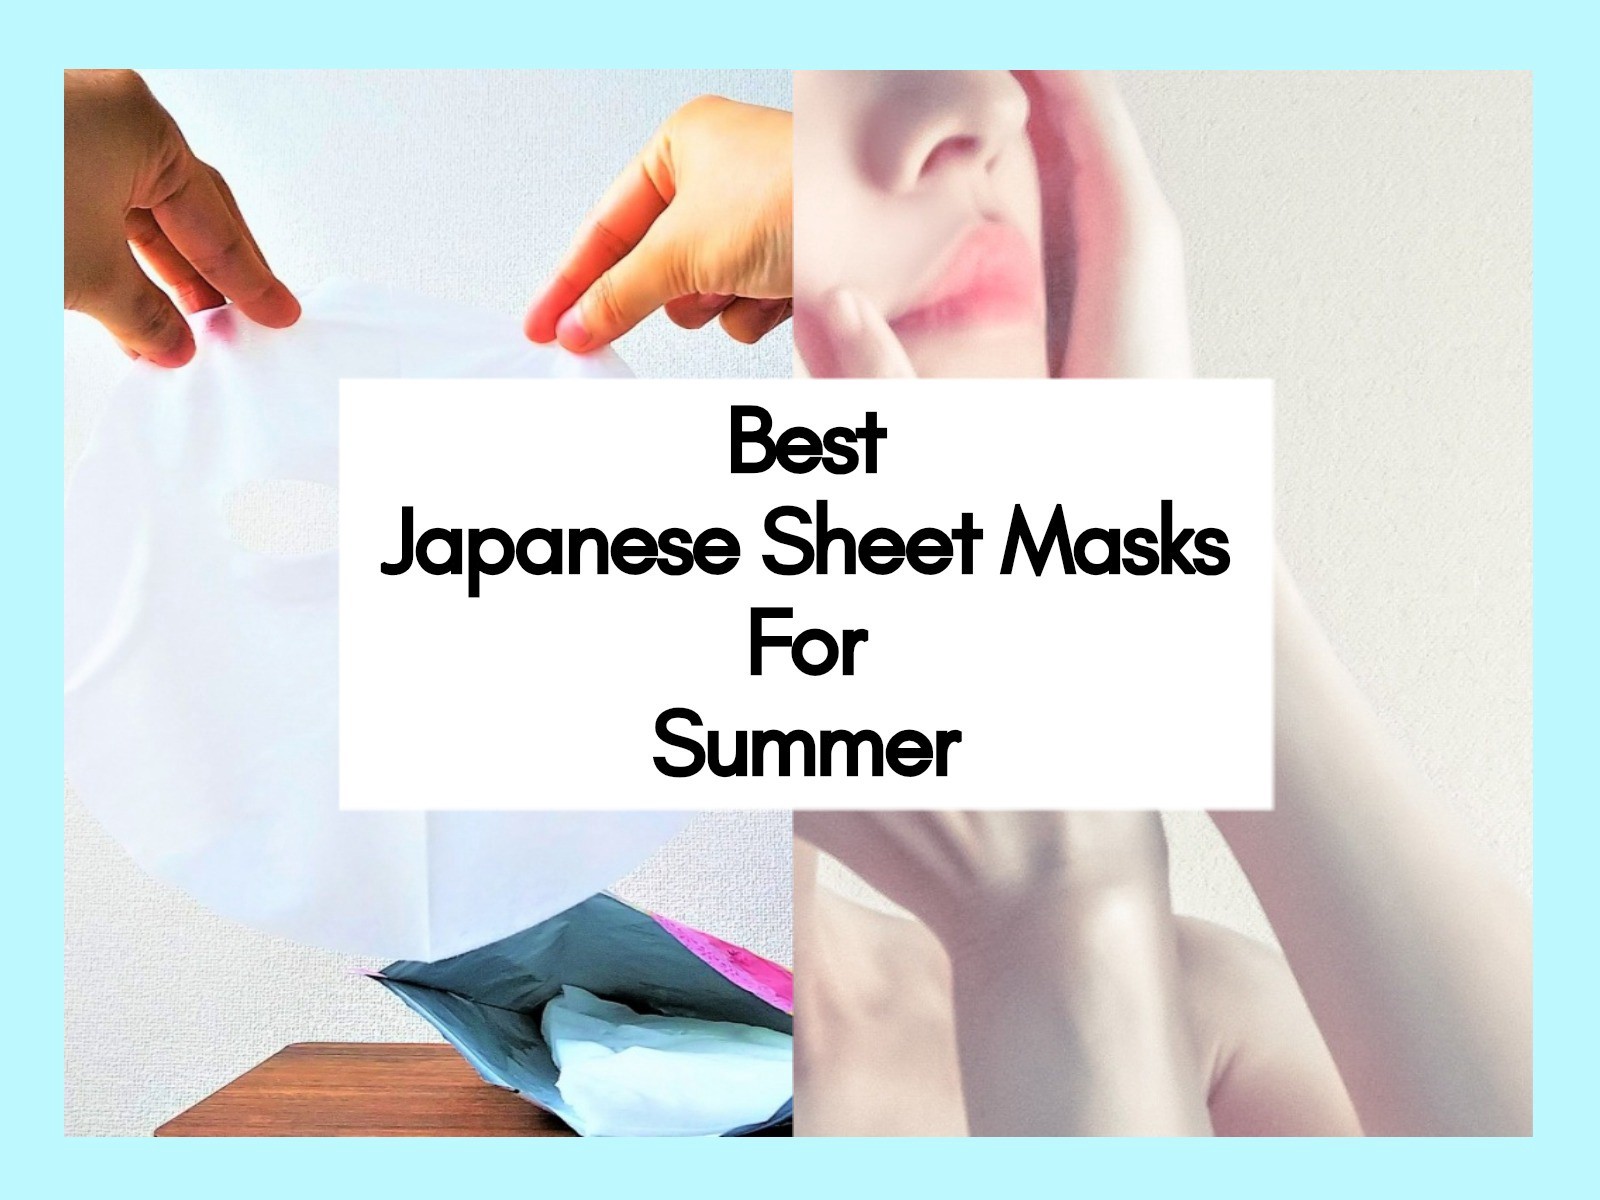 5 Best Japanese Sheet Masks for Summer